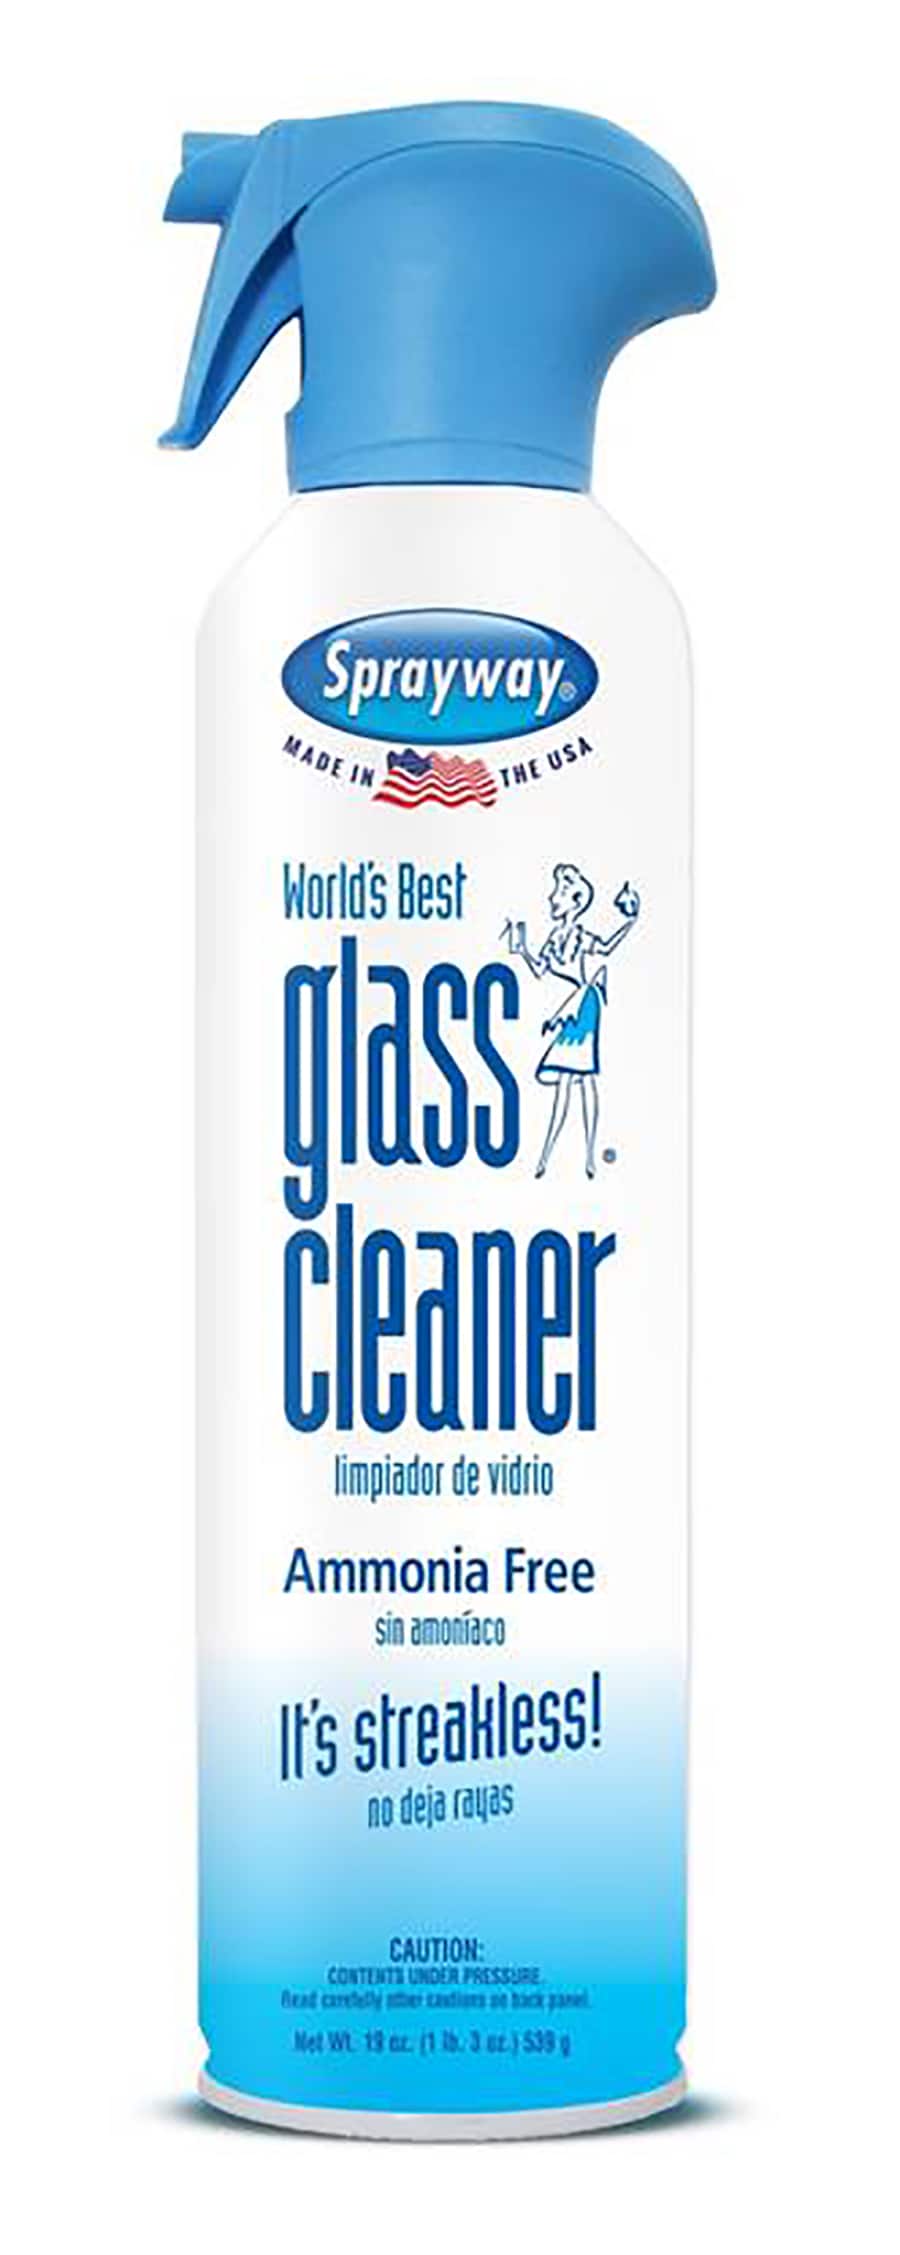 Sprayway 19-oz Aerosol Spray Glass Cleaner (6-Pack) at